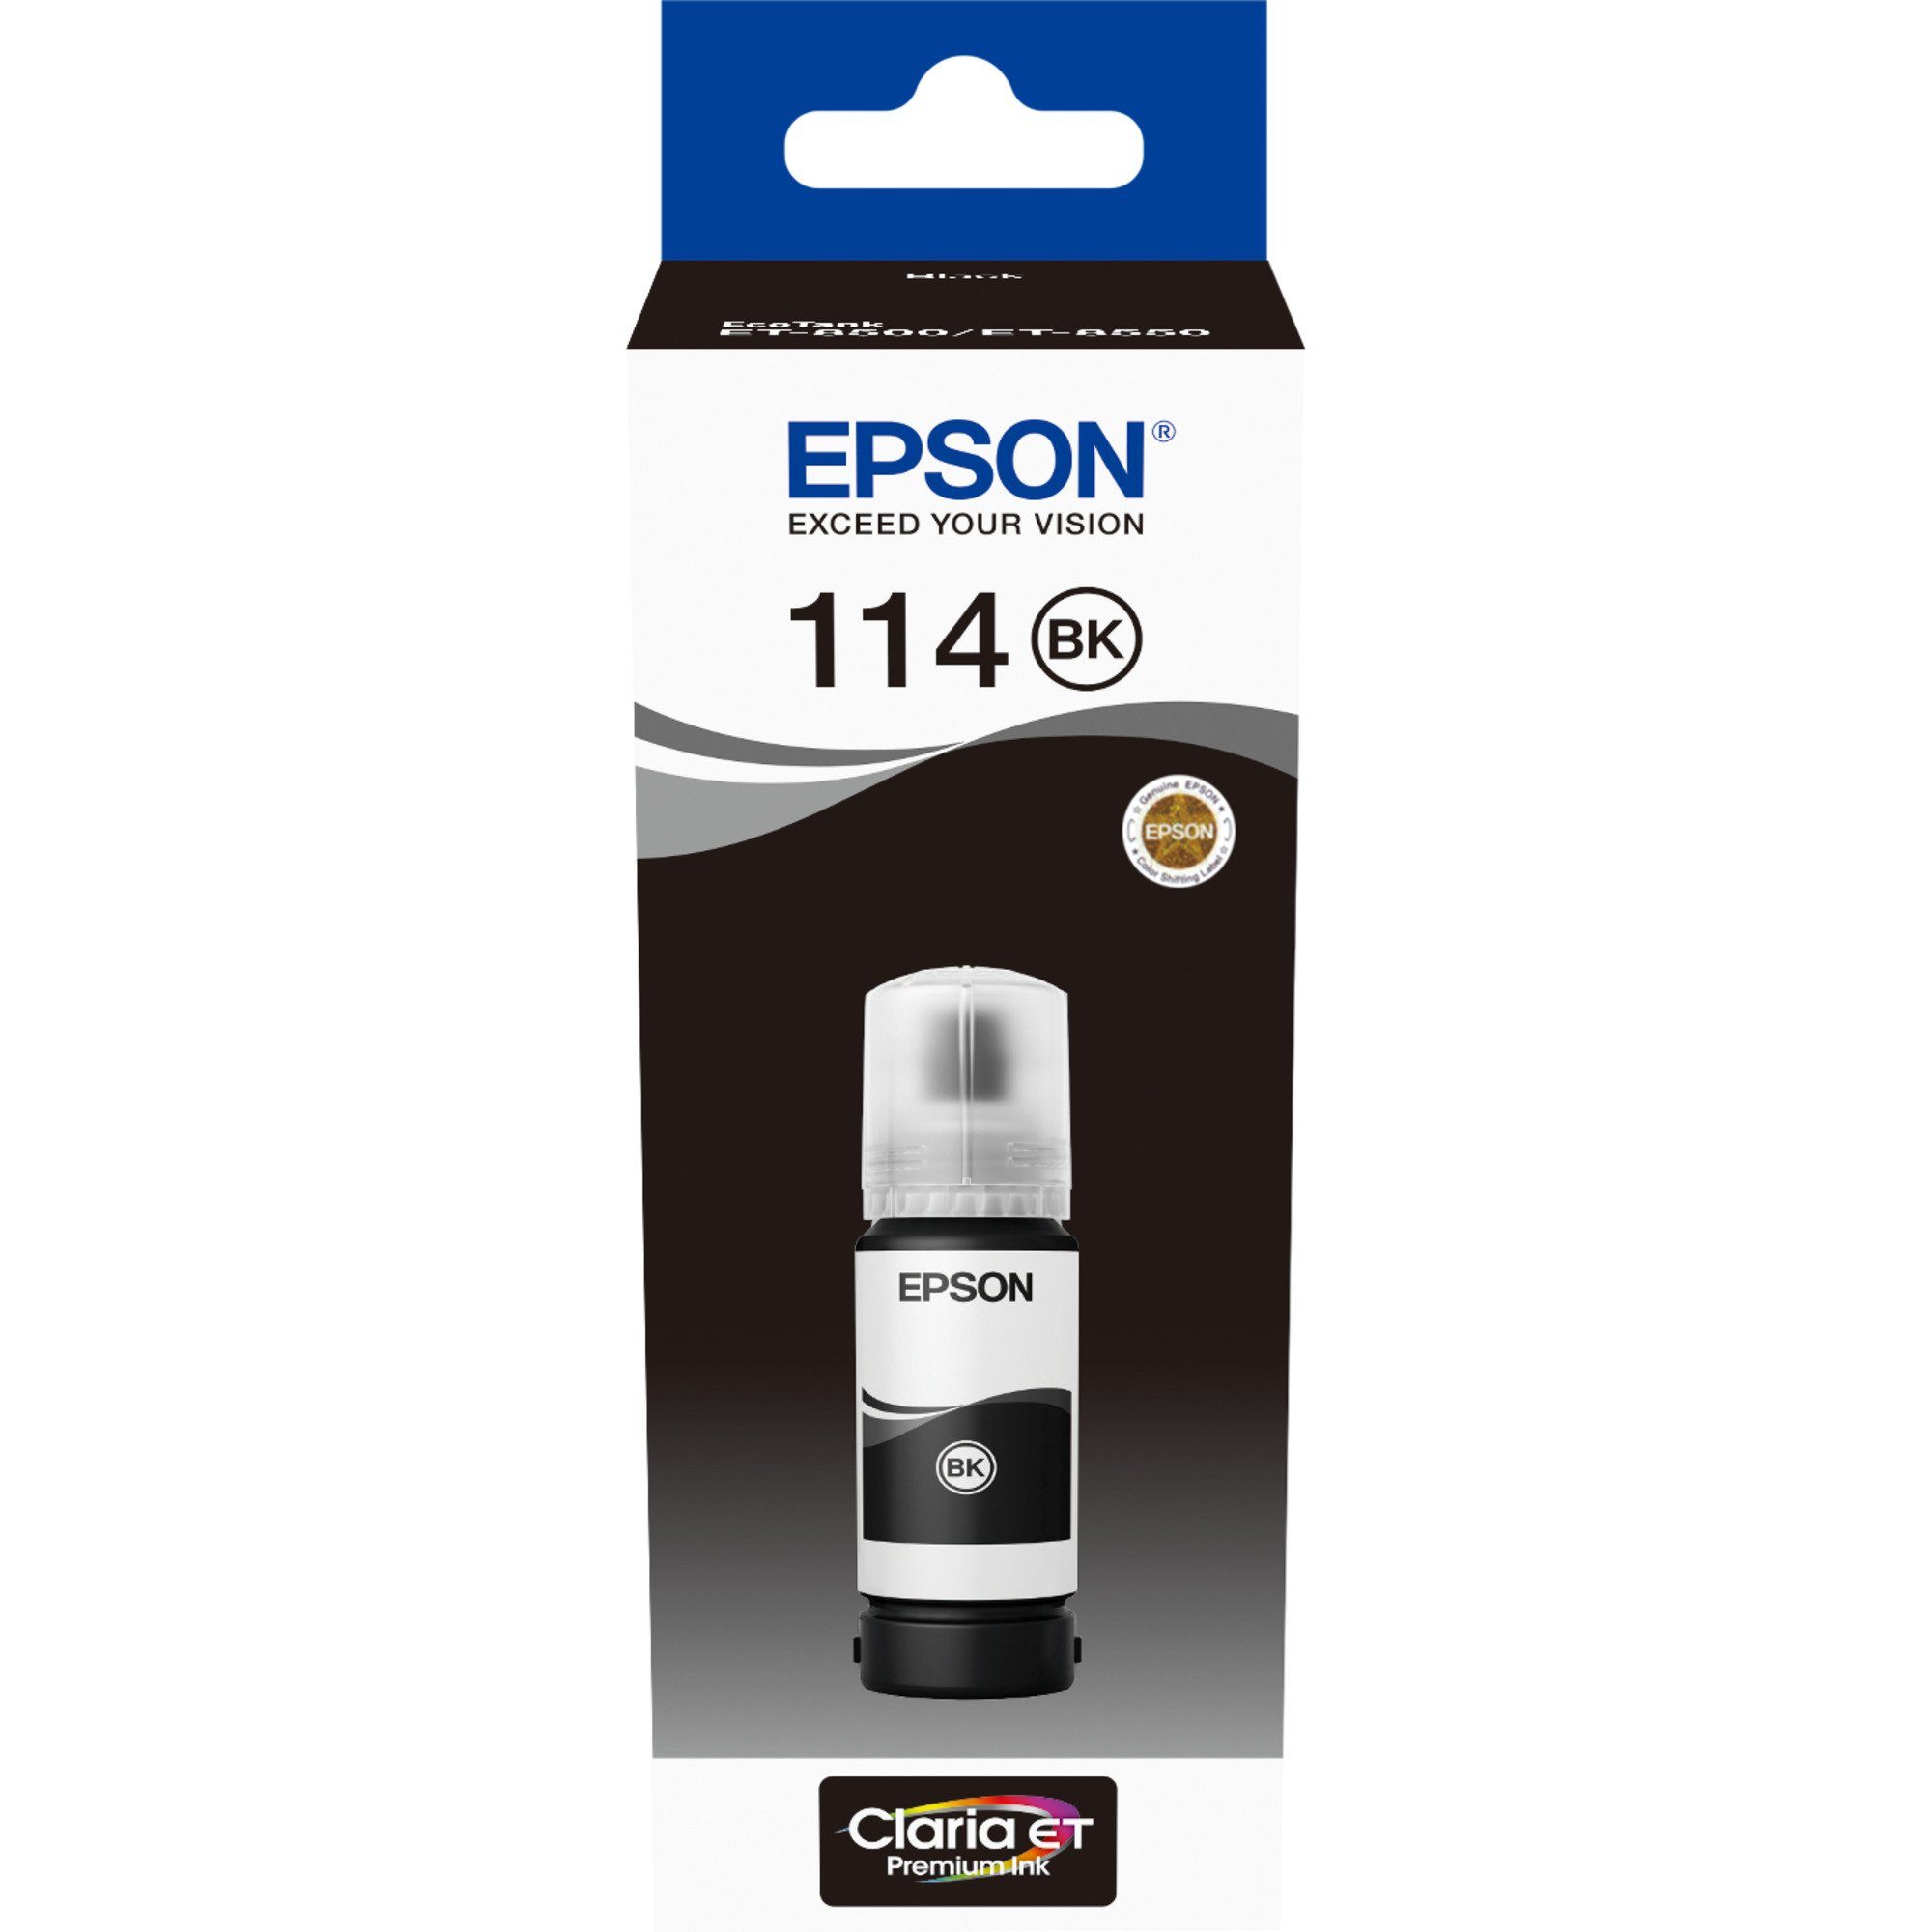 Epson Epson Tinte EcoTank Pigment-schwarz 114 pigment schwarz Tintenpatrone